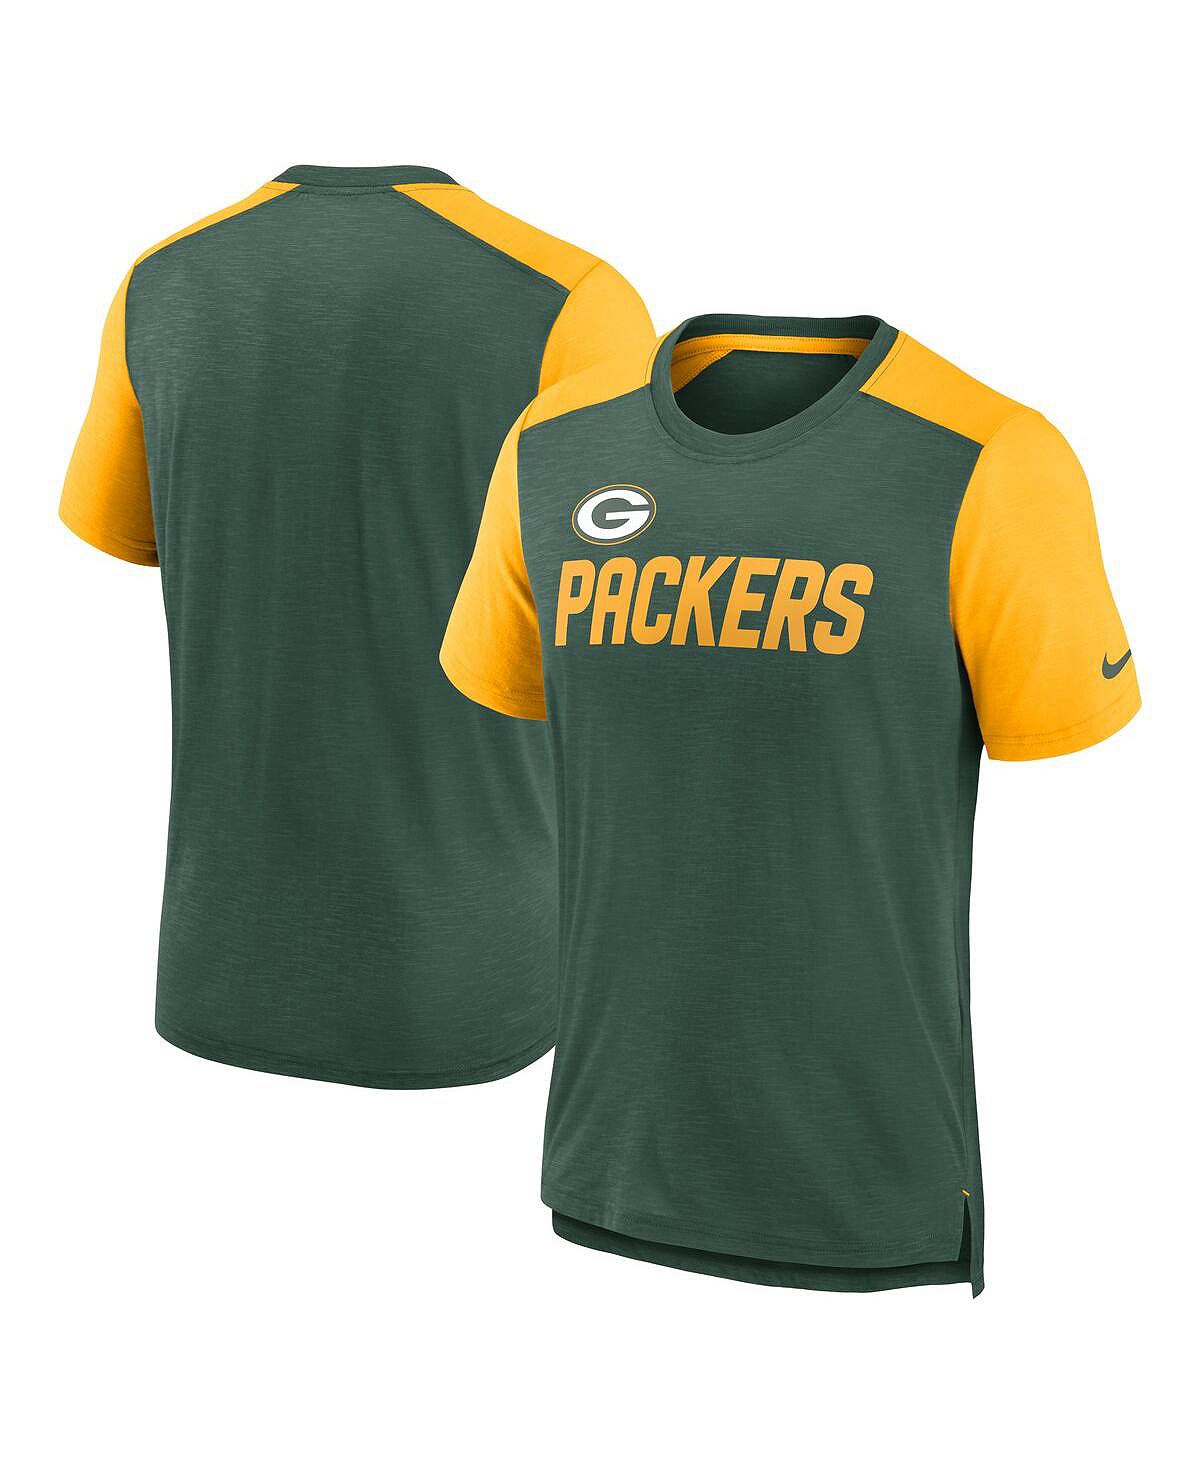 Мужская футболка с названием команды Green Bay Packers в стиле колор-блок, зеленая, золотистая с меланжевым отливом Nike